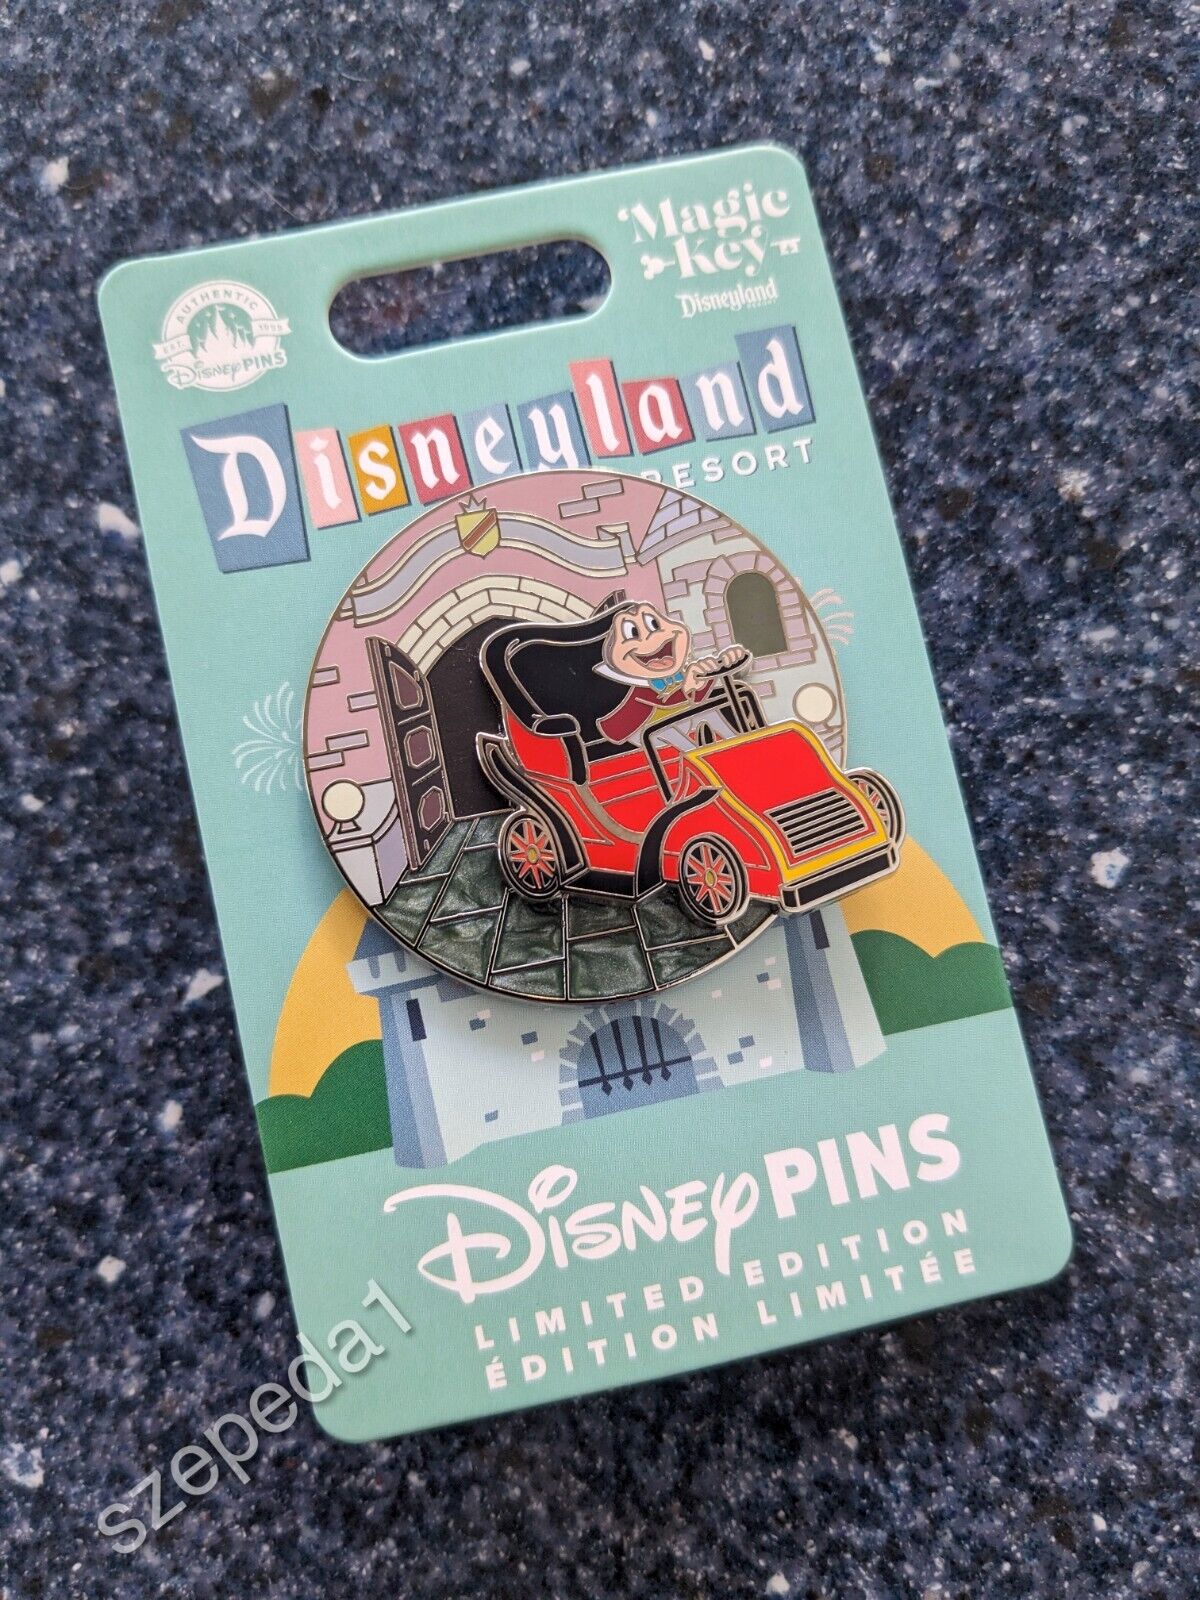 Disneyland exclusive Mr. Toad's Wild Ride Magic Key LE Pin 